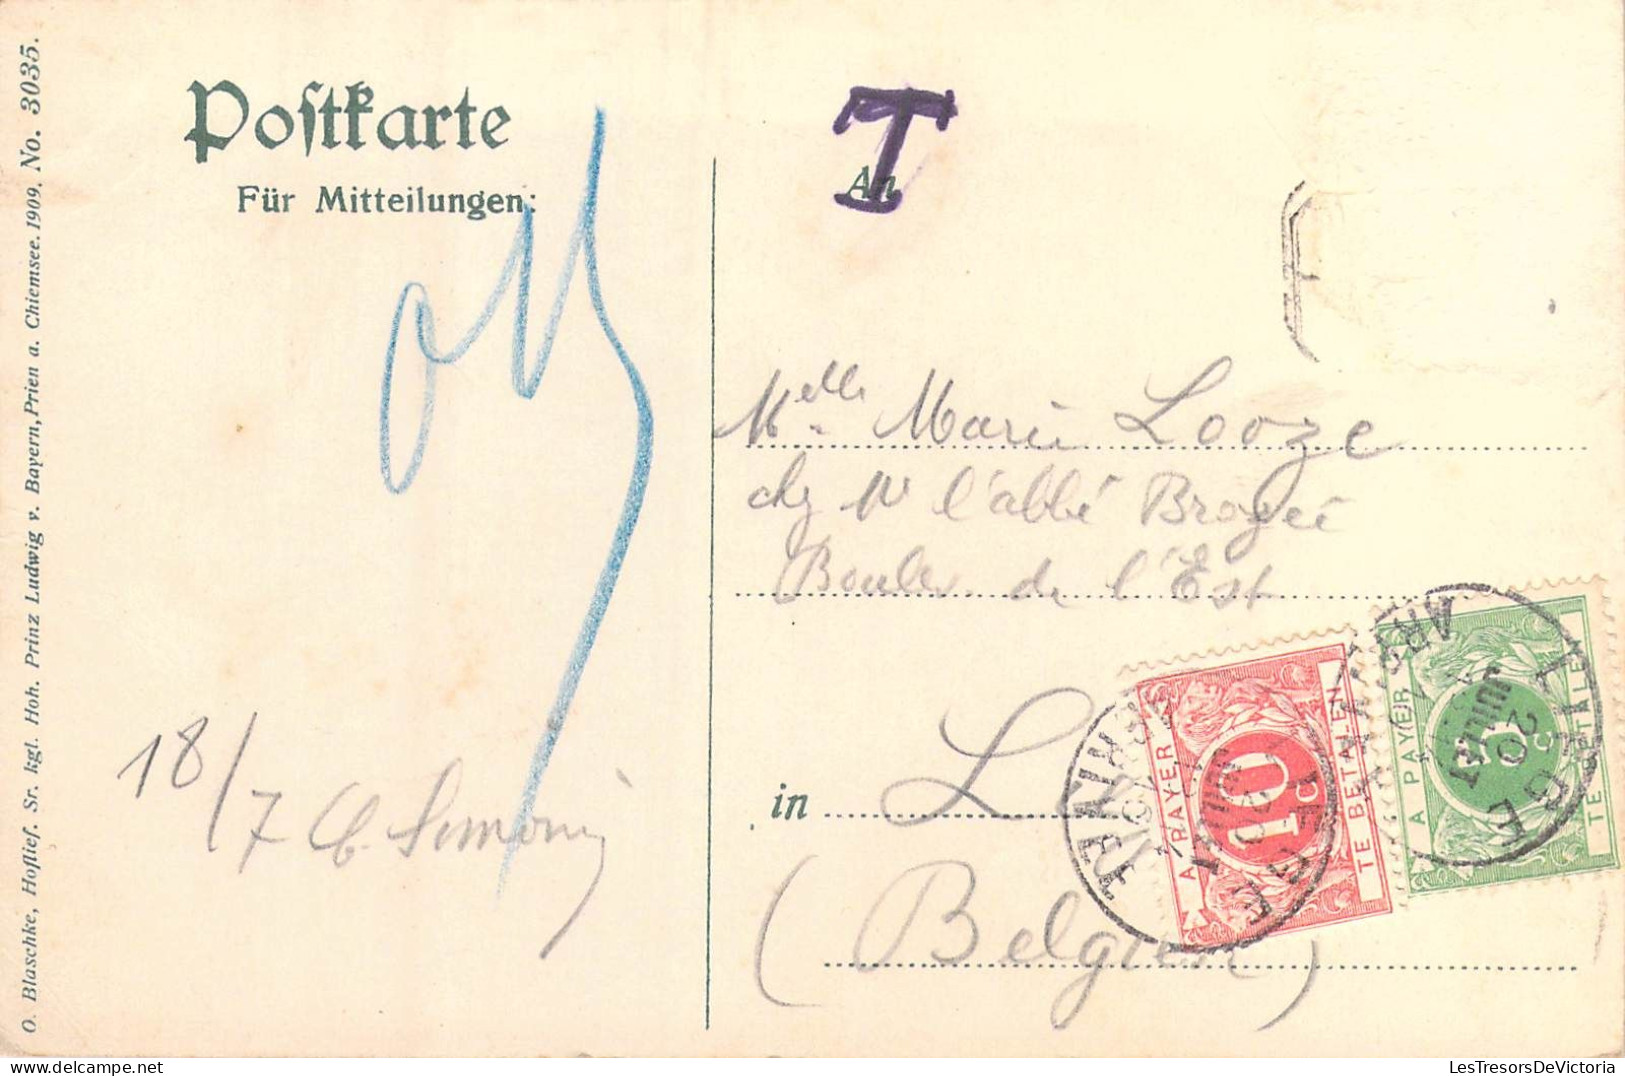 AUTRICHE - Kitzbuhel In Tirol Mit Dem Kaisergebirge - Carte Postale Ancienne - Kitzbühel